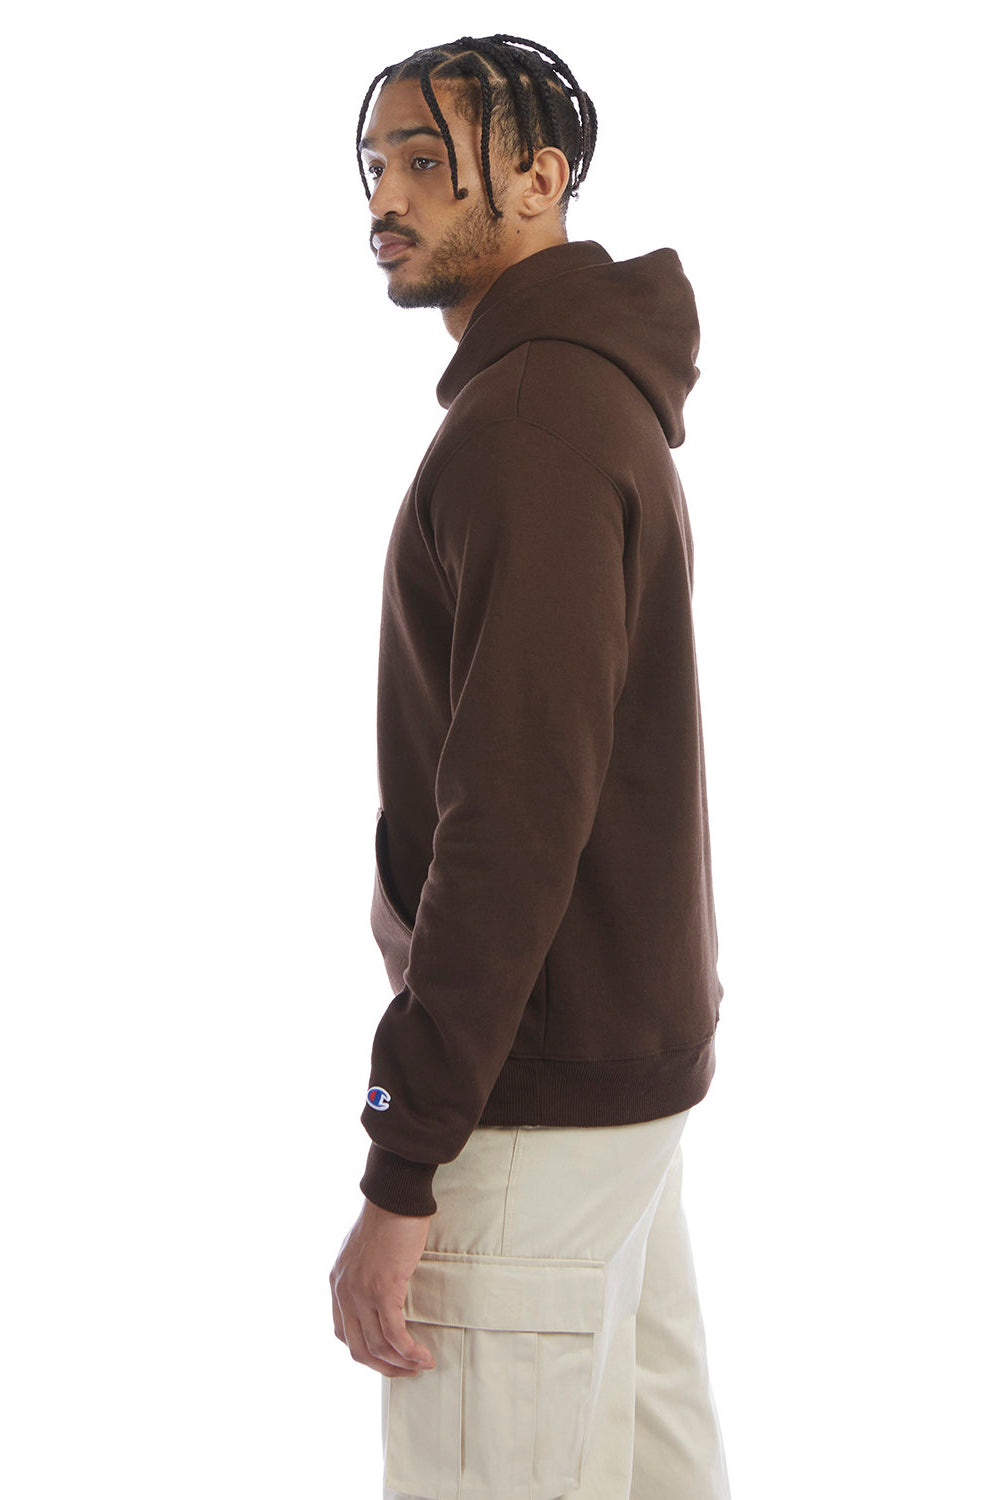 Champion S700 Mens Double Dry Eco Moisture Wicking Fleece Hooded Sweatshirt Hoodie Chocolate Brown SIde